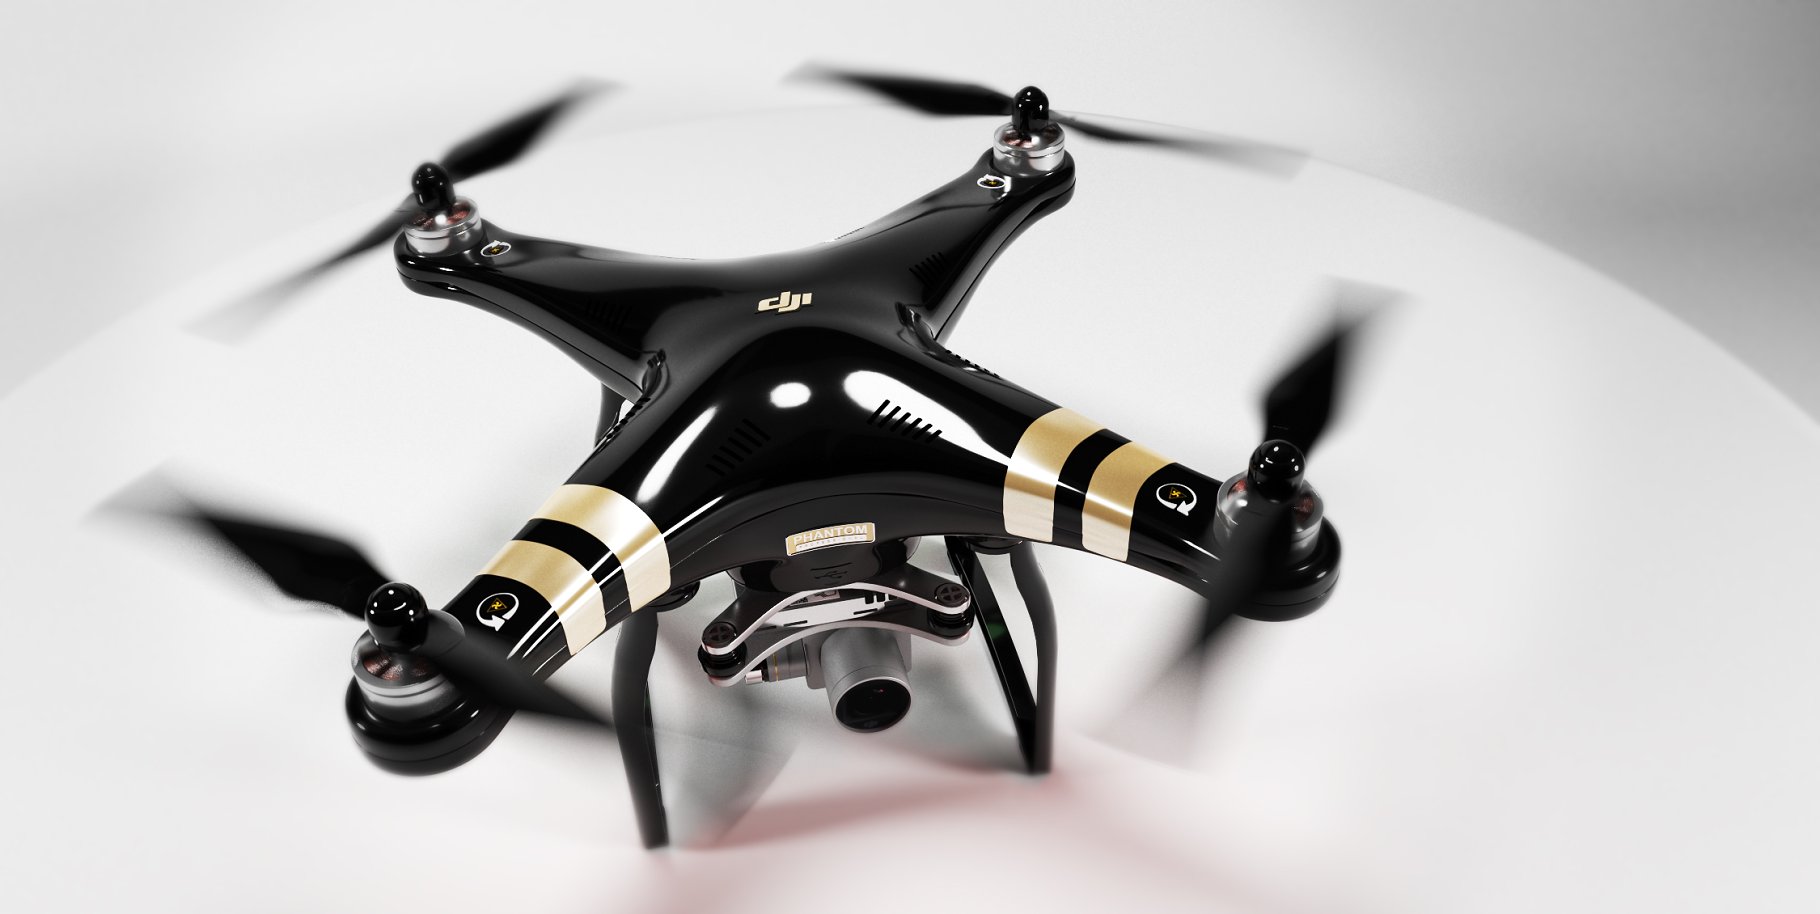 Gorgeous image of the black DJI Phantom 3 drone